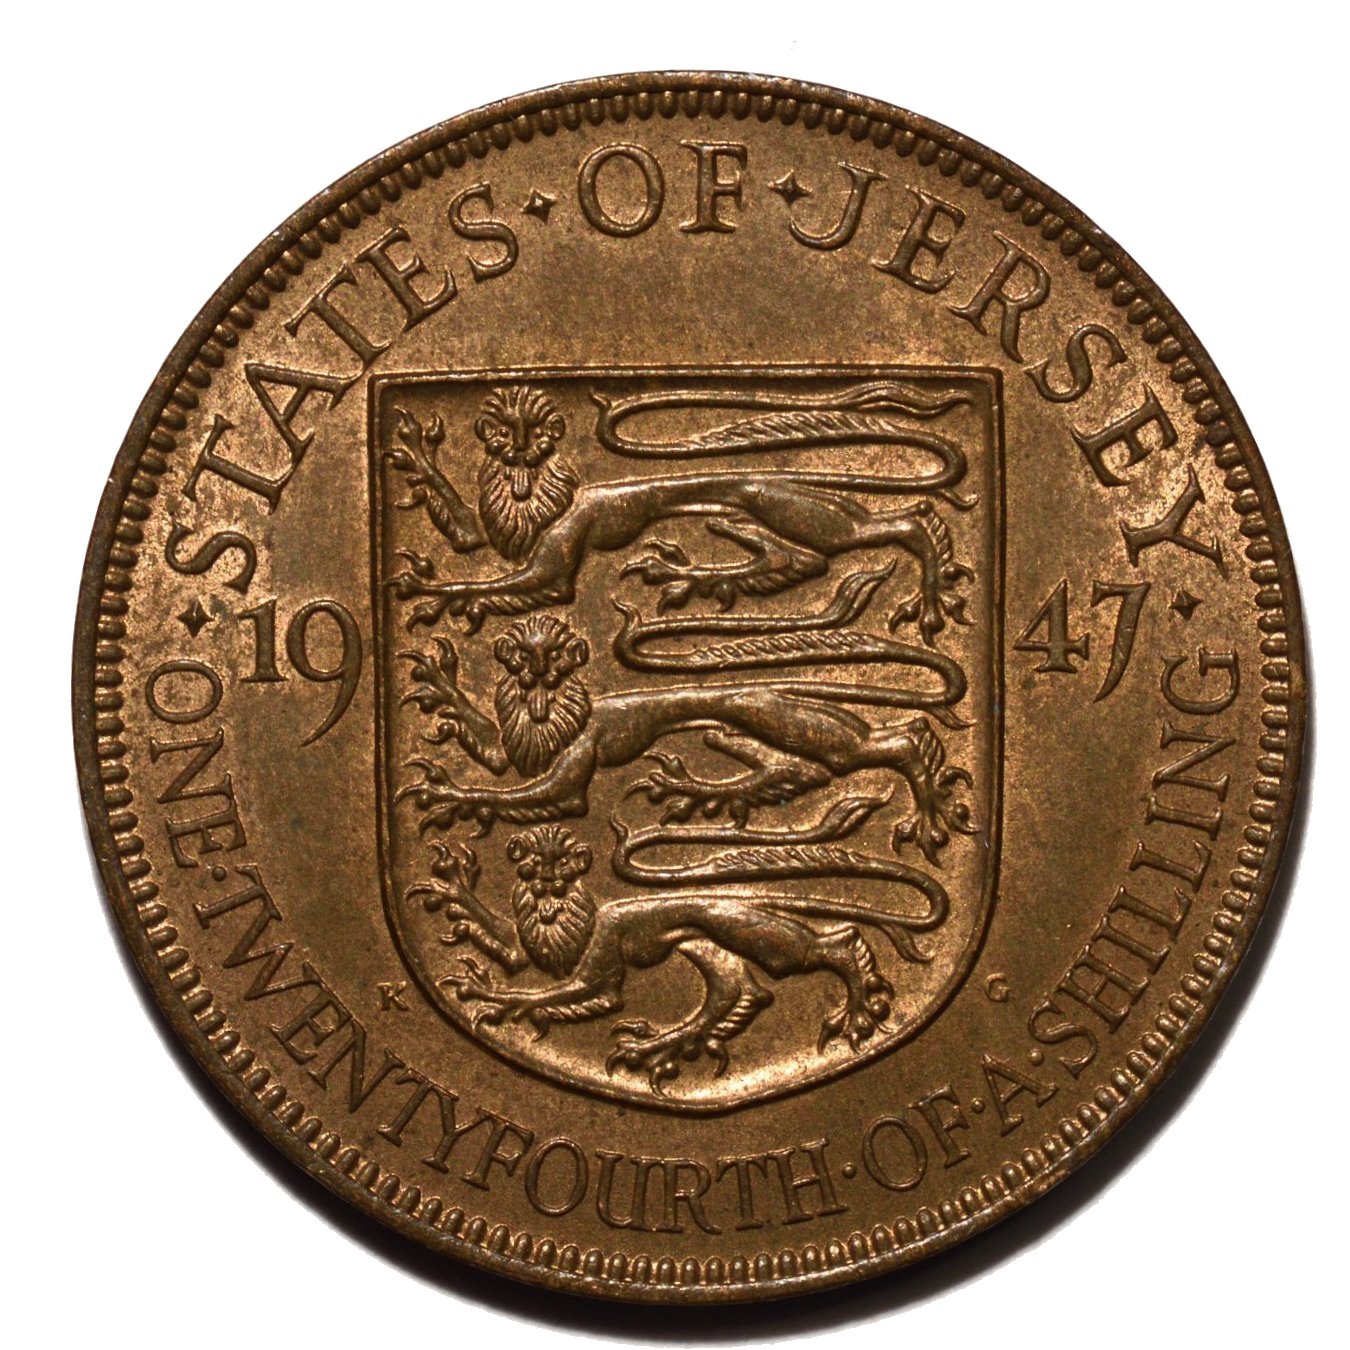 1947 half penny reverse